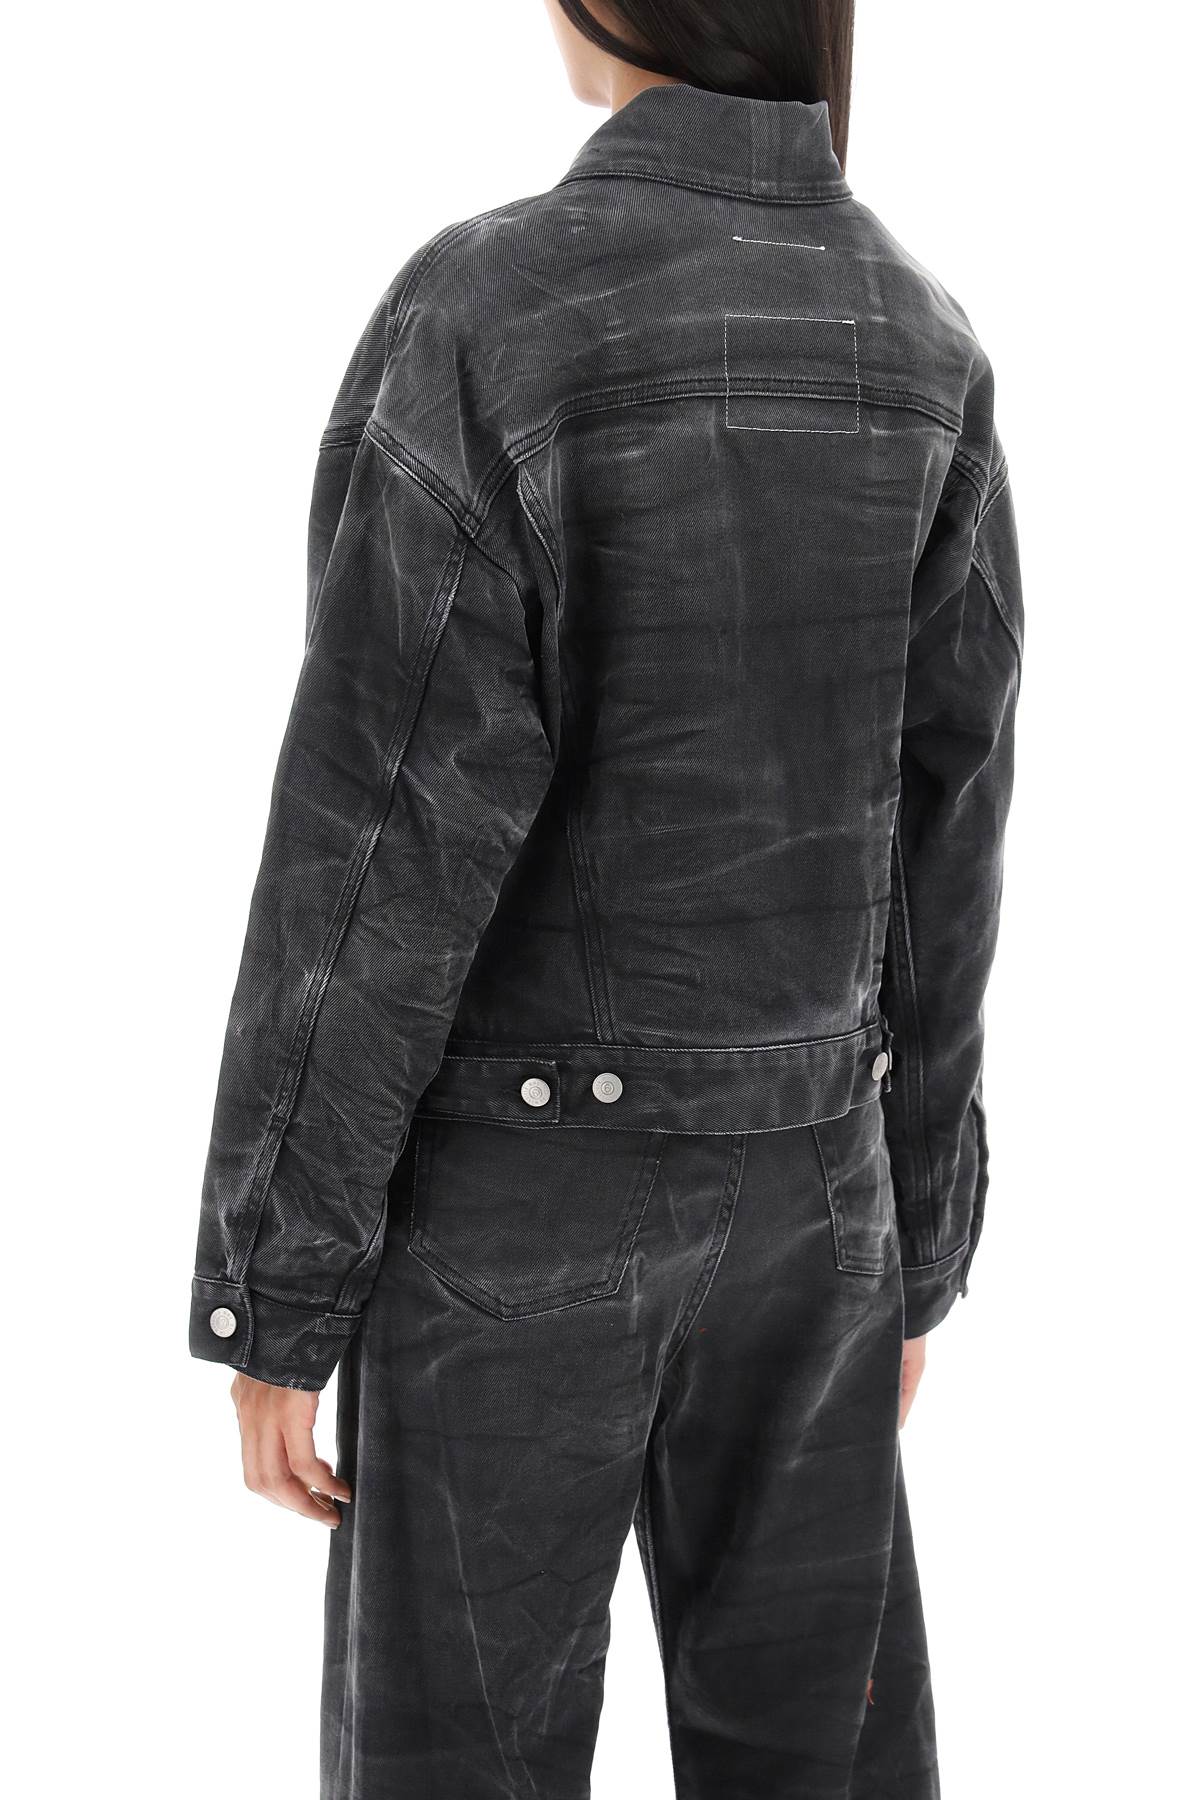 Mm6 maison margiela crinkle-effect denim jacket